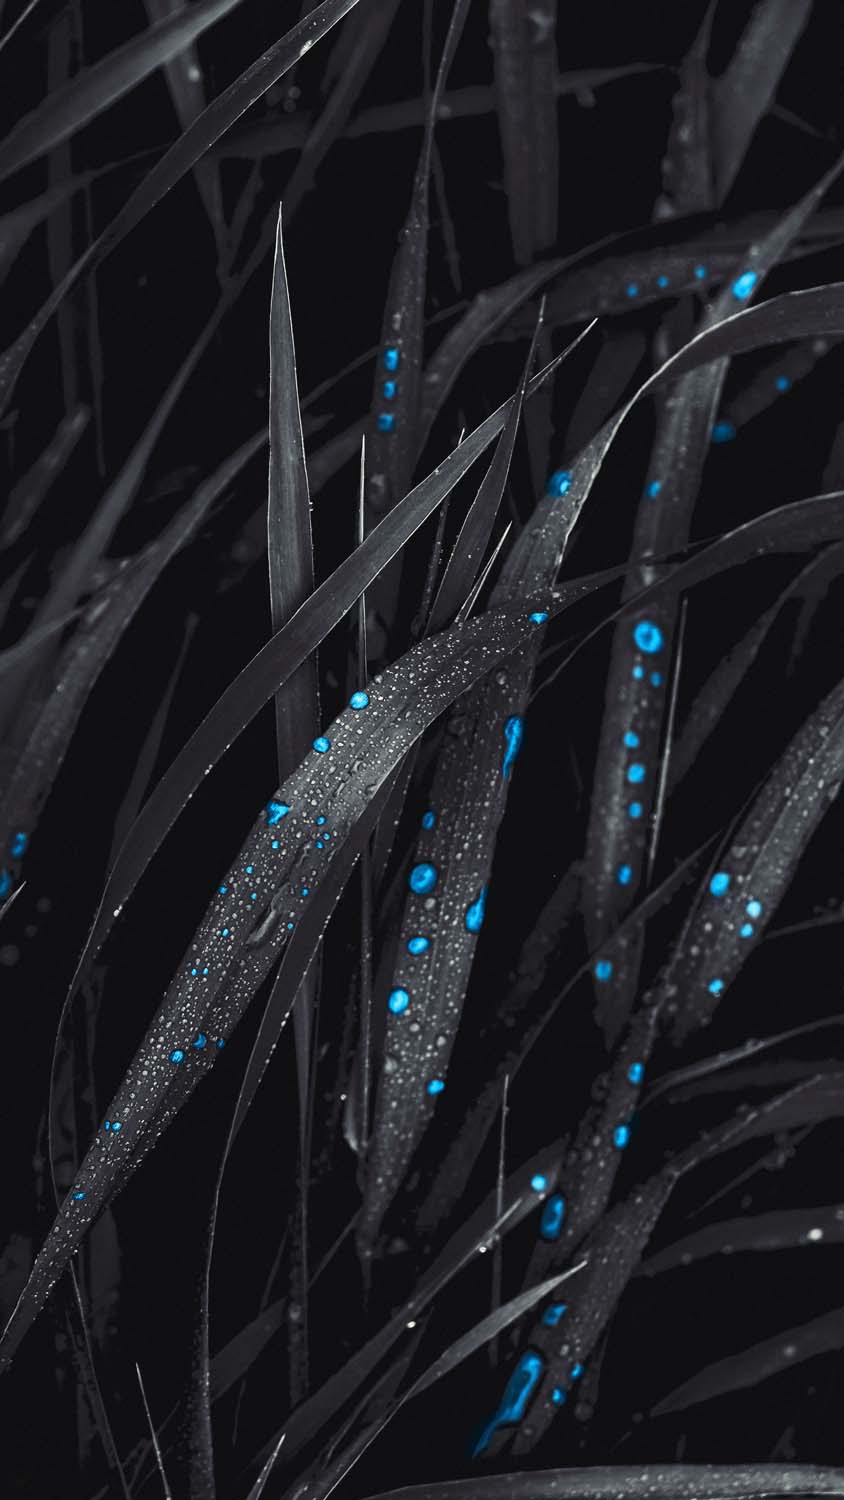 Water Drops on Plants iPhone Wallpaper HD